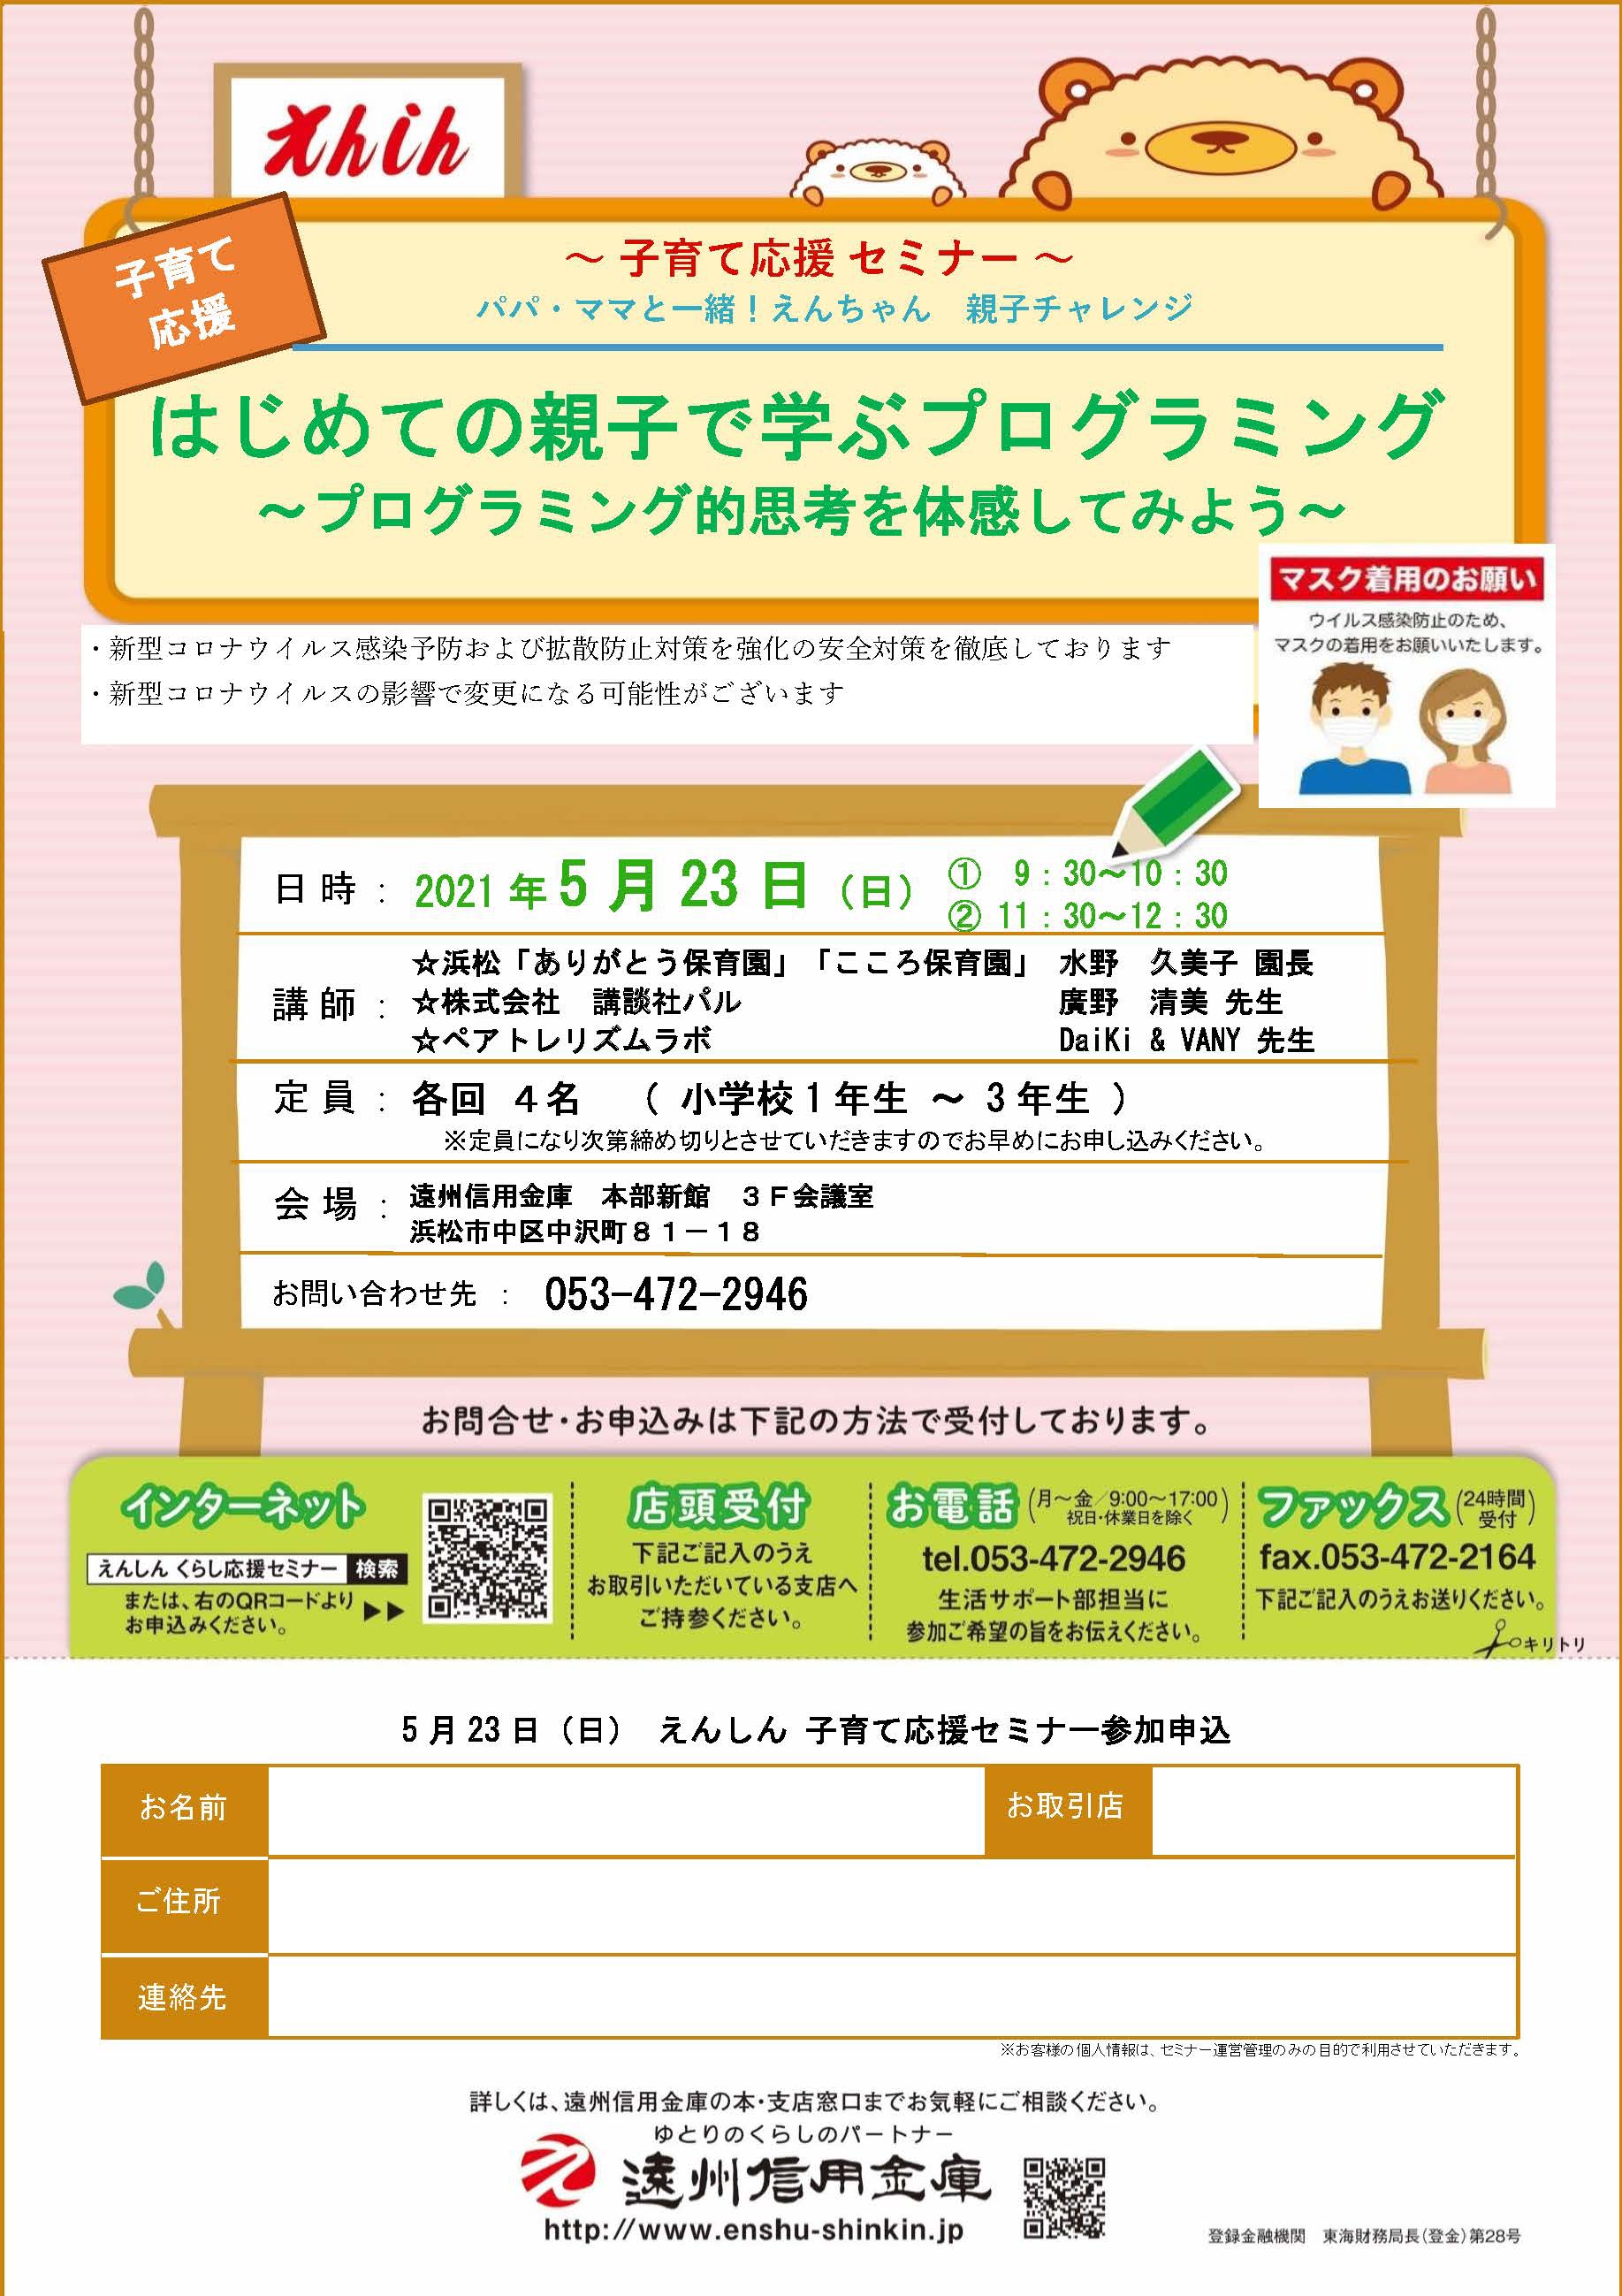 https://www.enshu-shinkin.jp/announce/images/seminar_210523_01.jpg